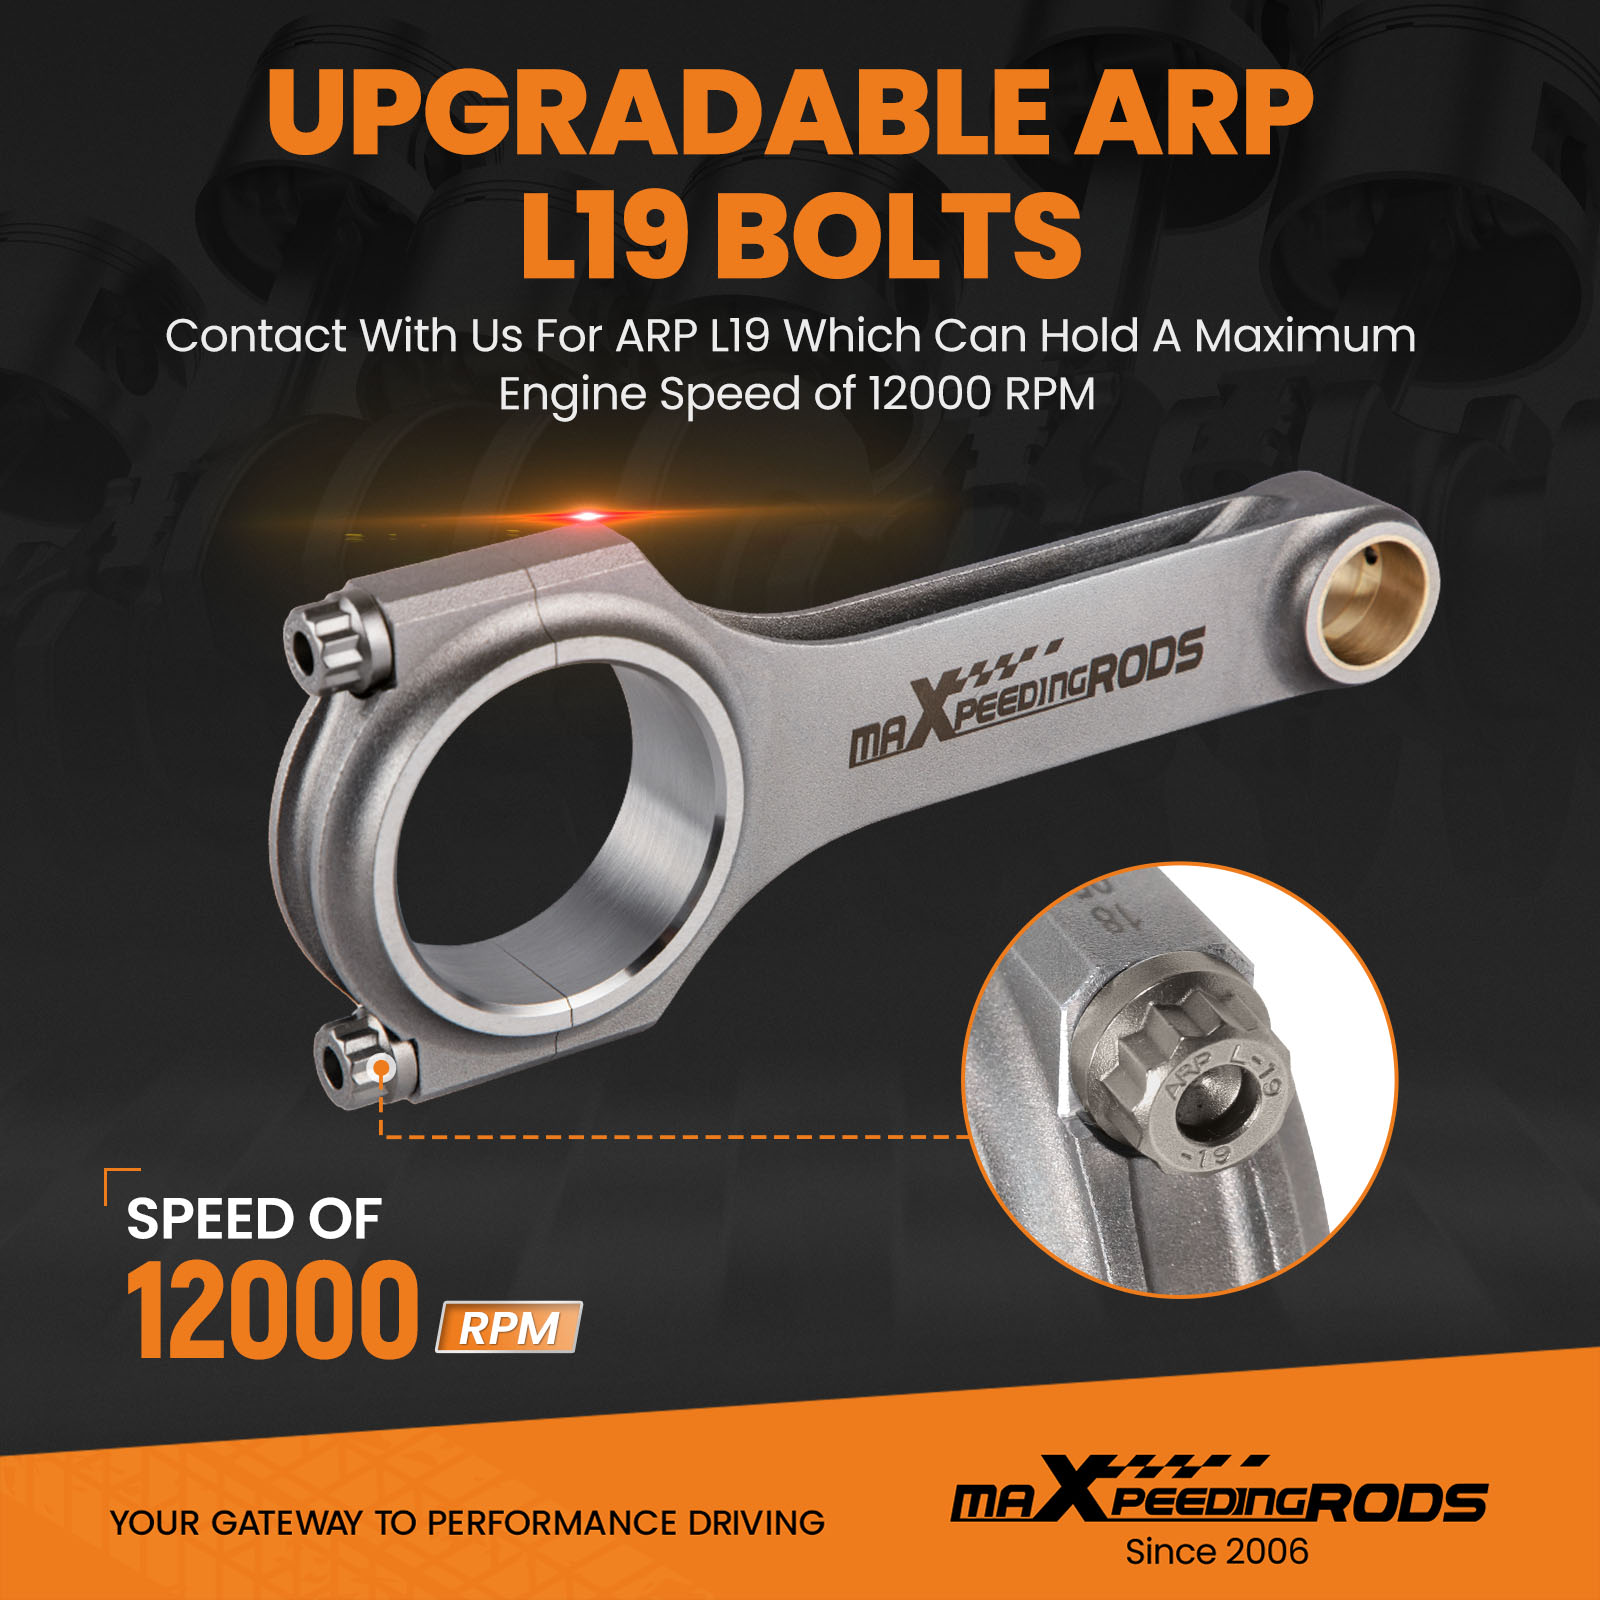 Upgradable ARP L19 Bolts